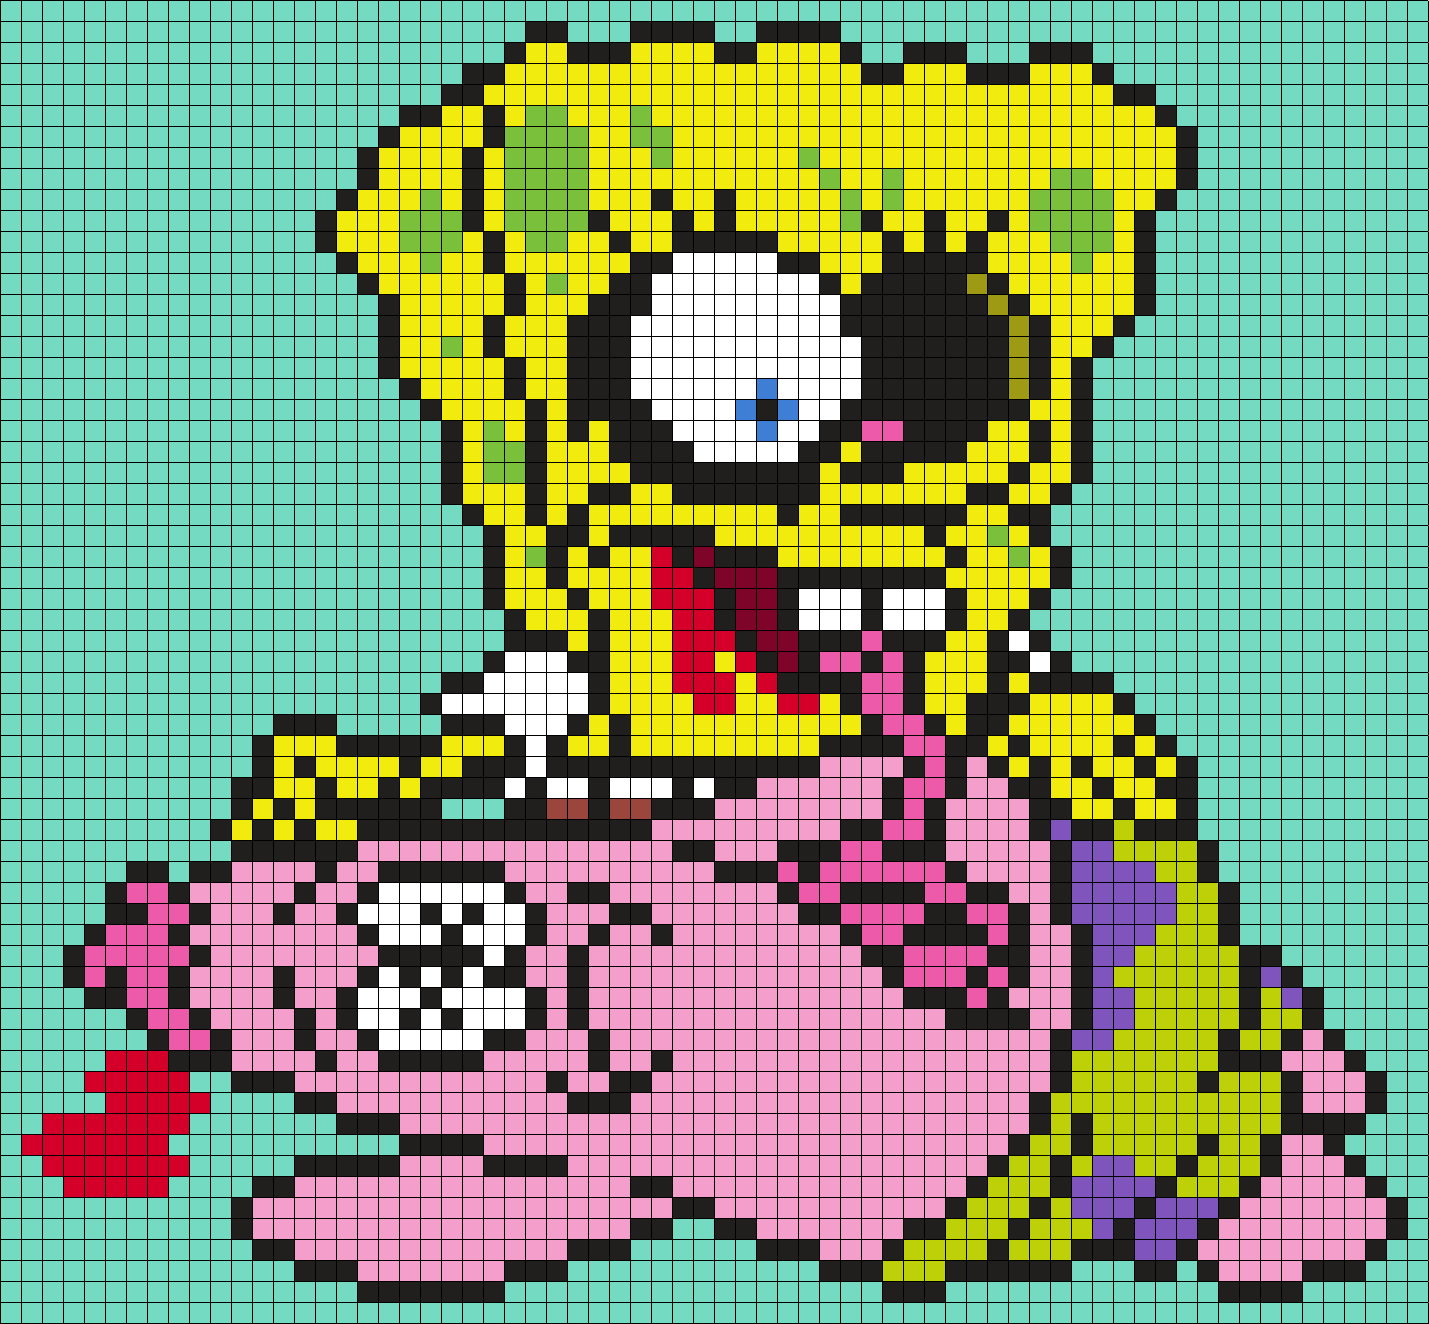 Zombie Spongebob Squarepants (square)